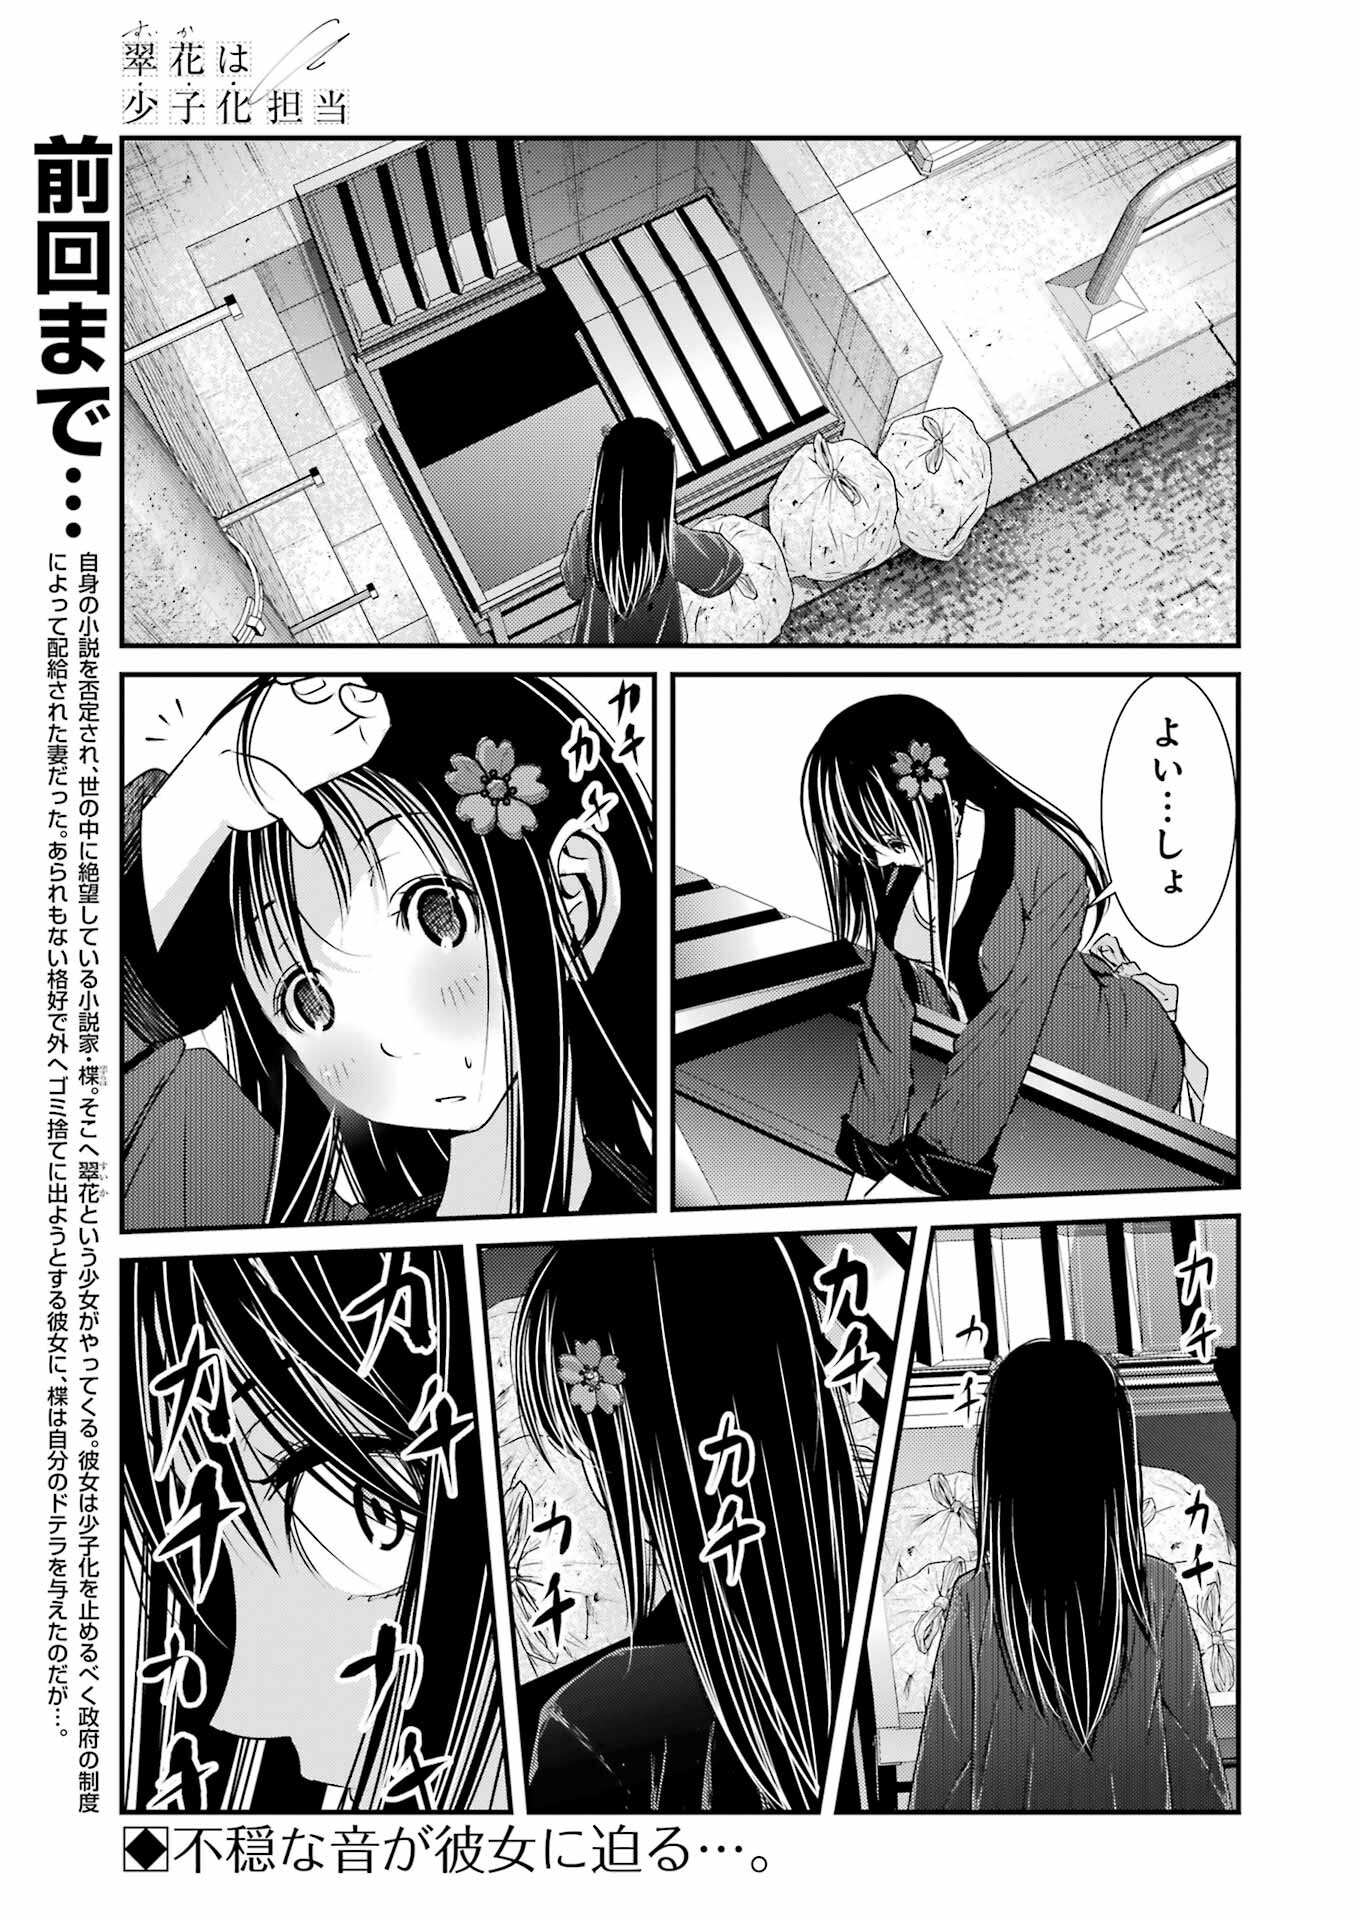 Suika wa Shoushika Tantou - Chapter 6 - Page 1